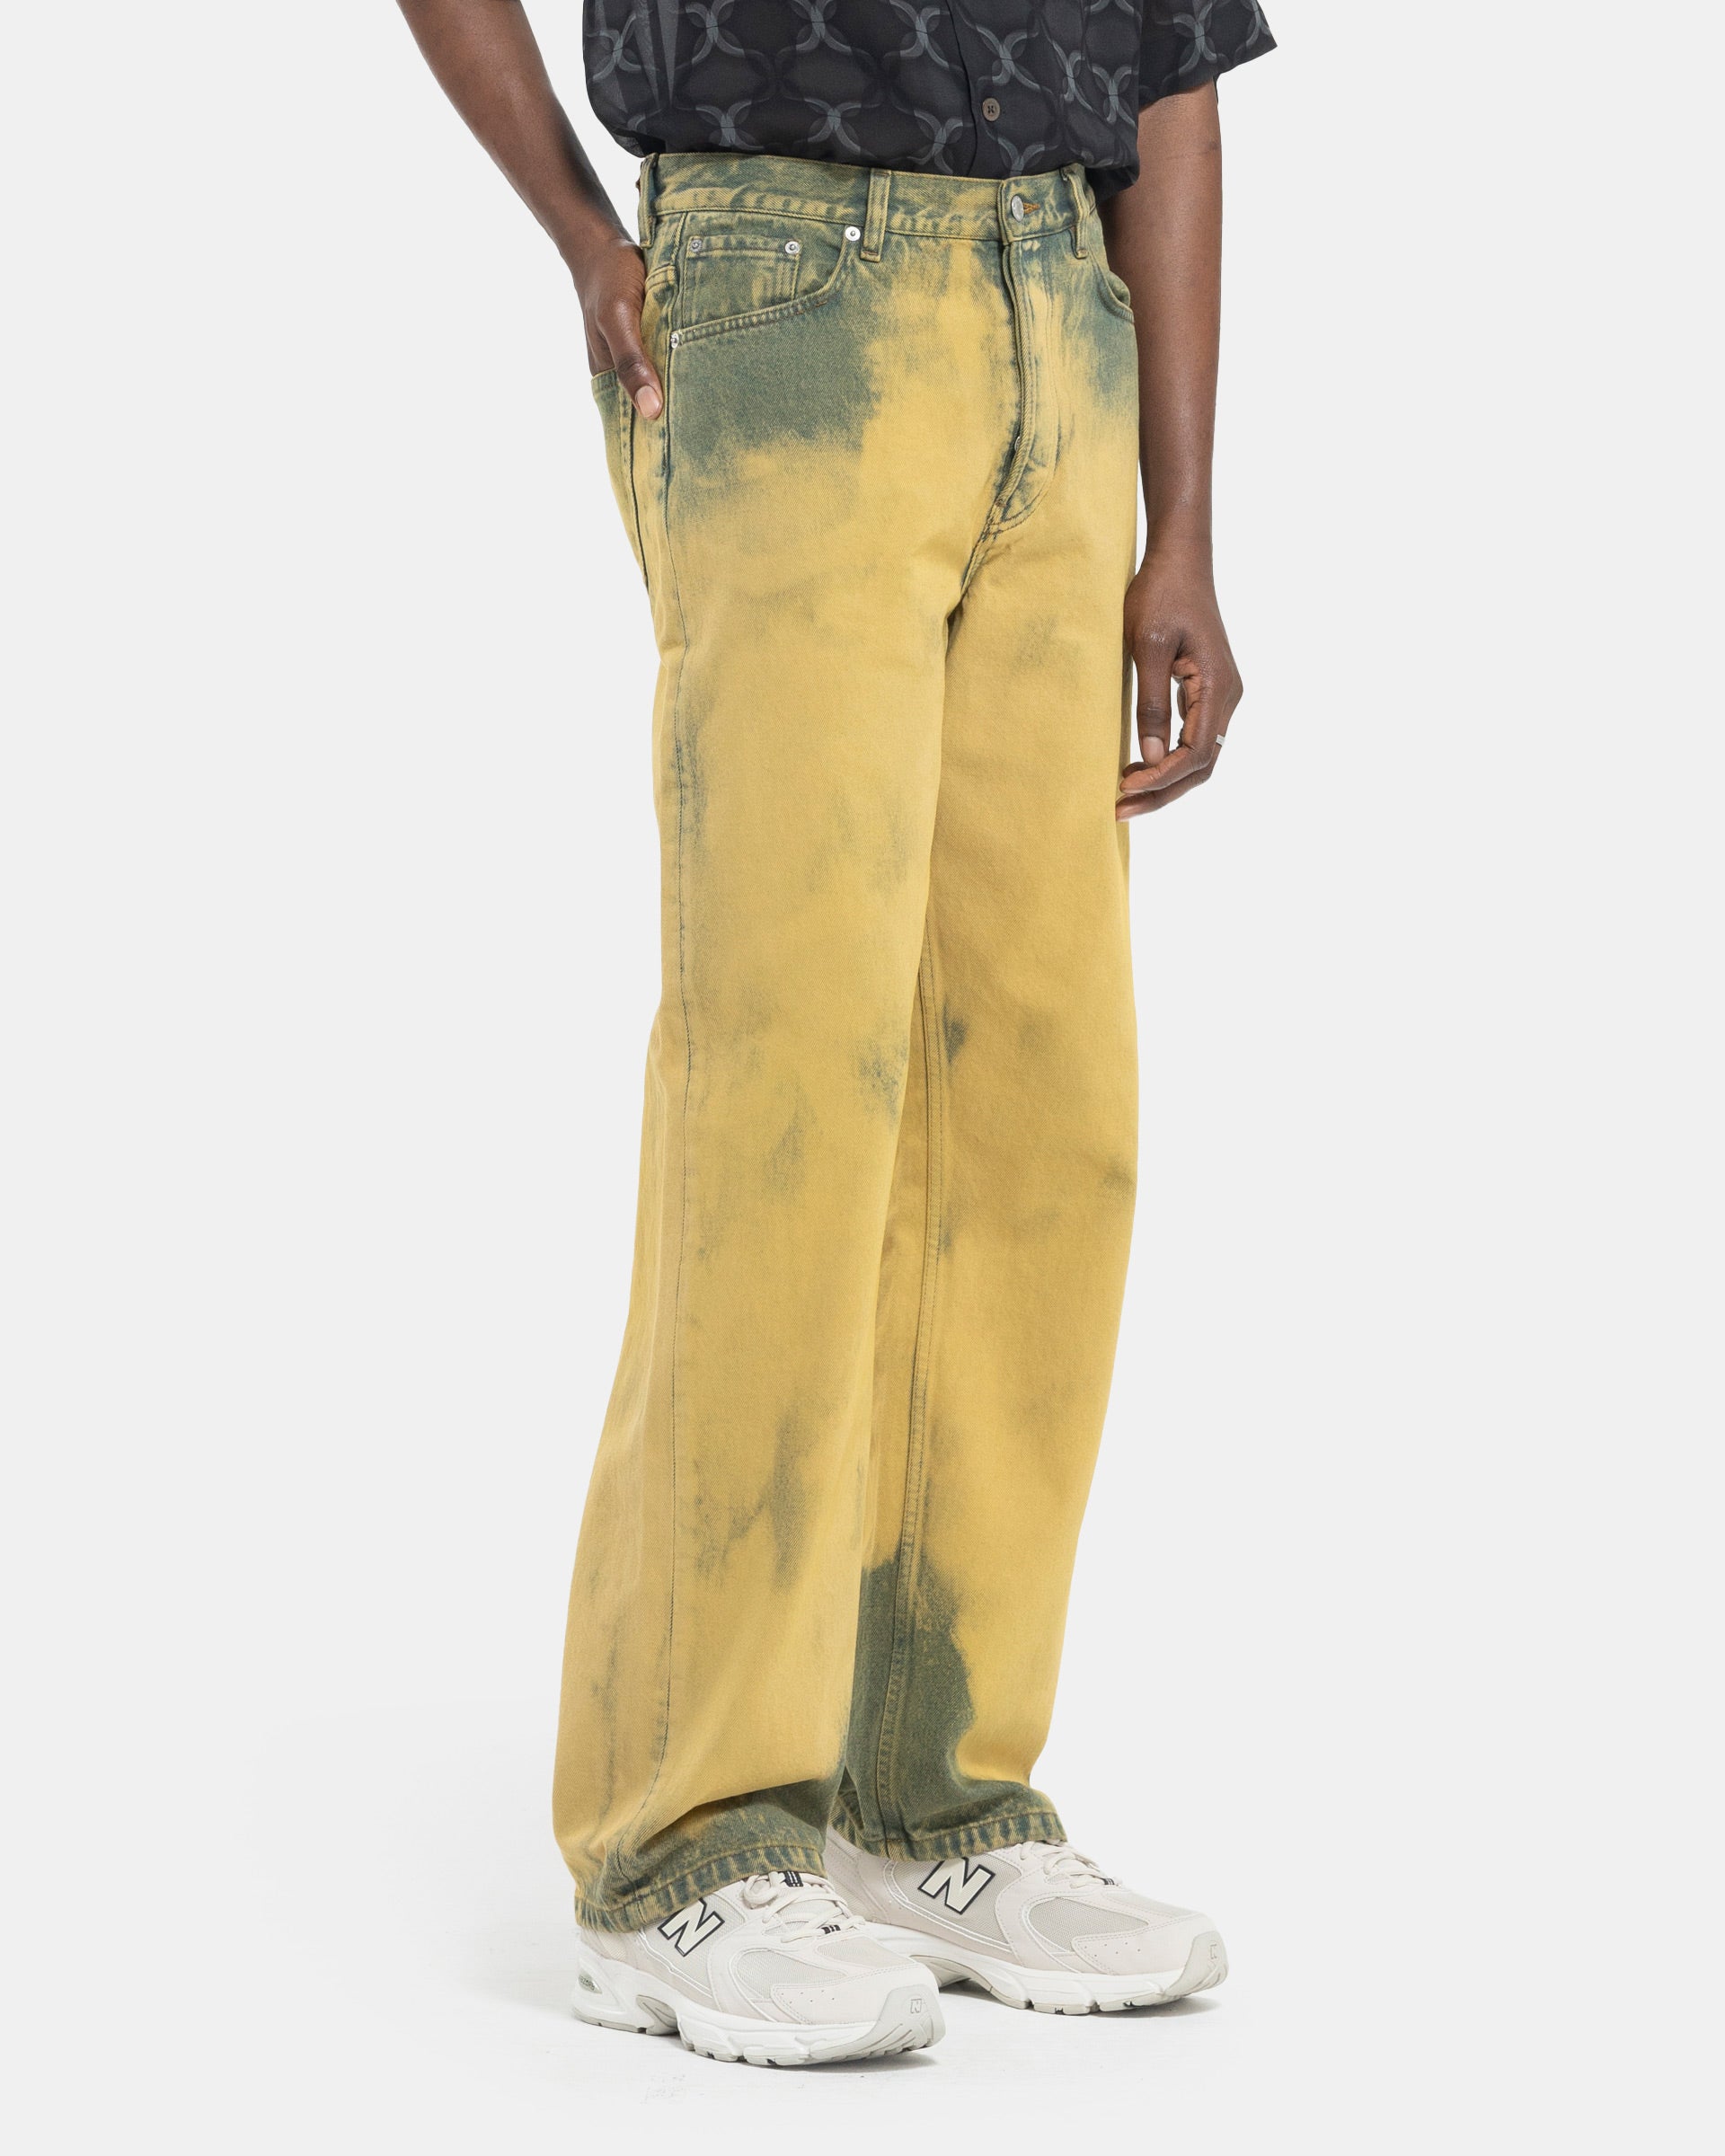 Model wearing Dries Van Noten Pine Pants in Lime on white background